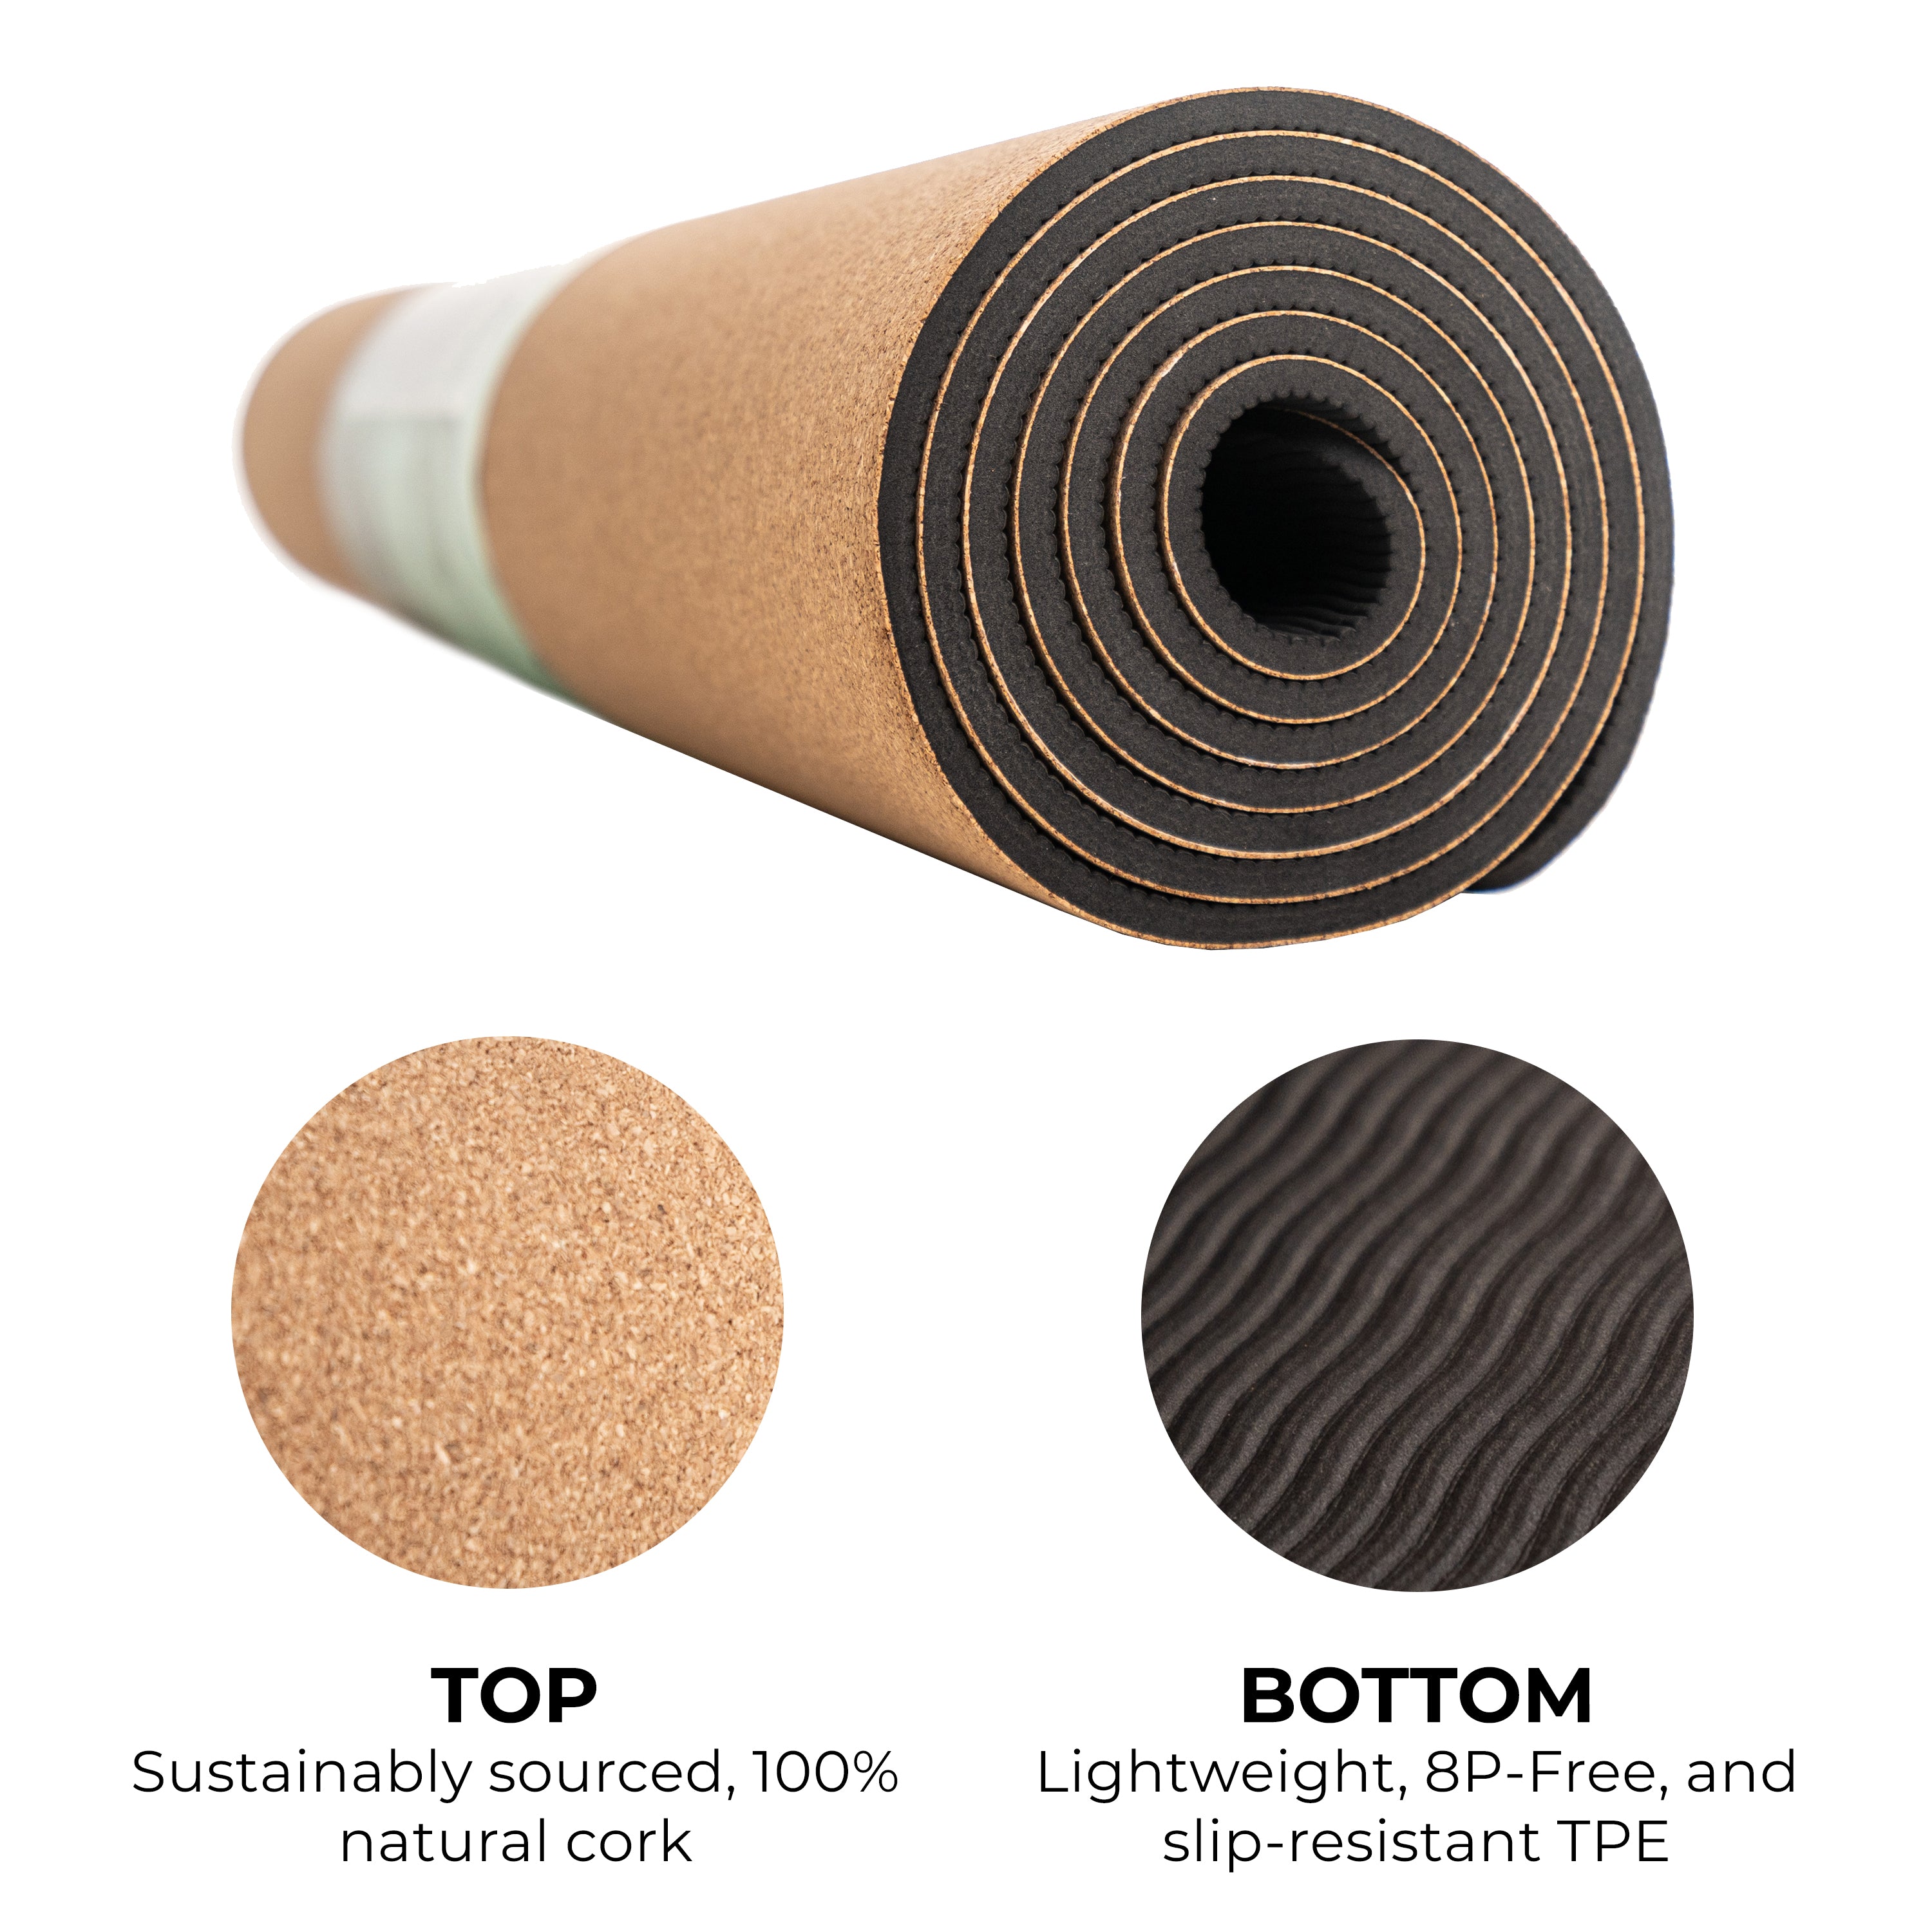 cork mat top and bottom surface